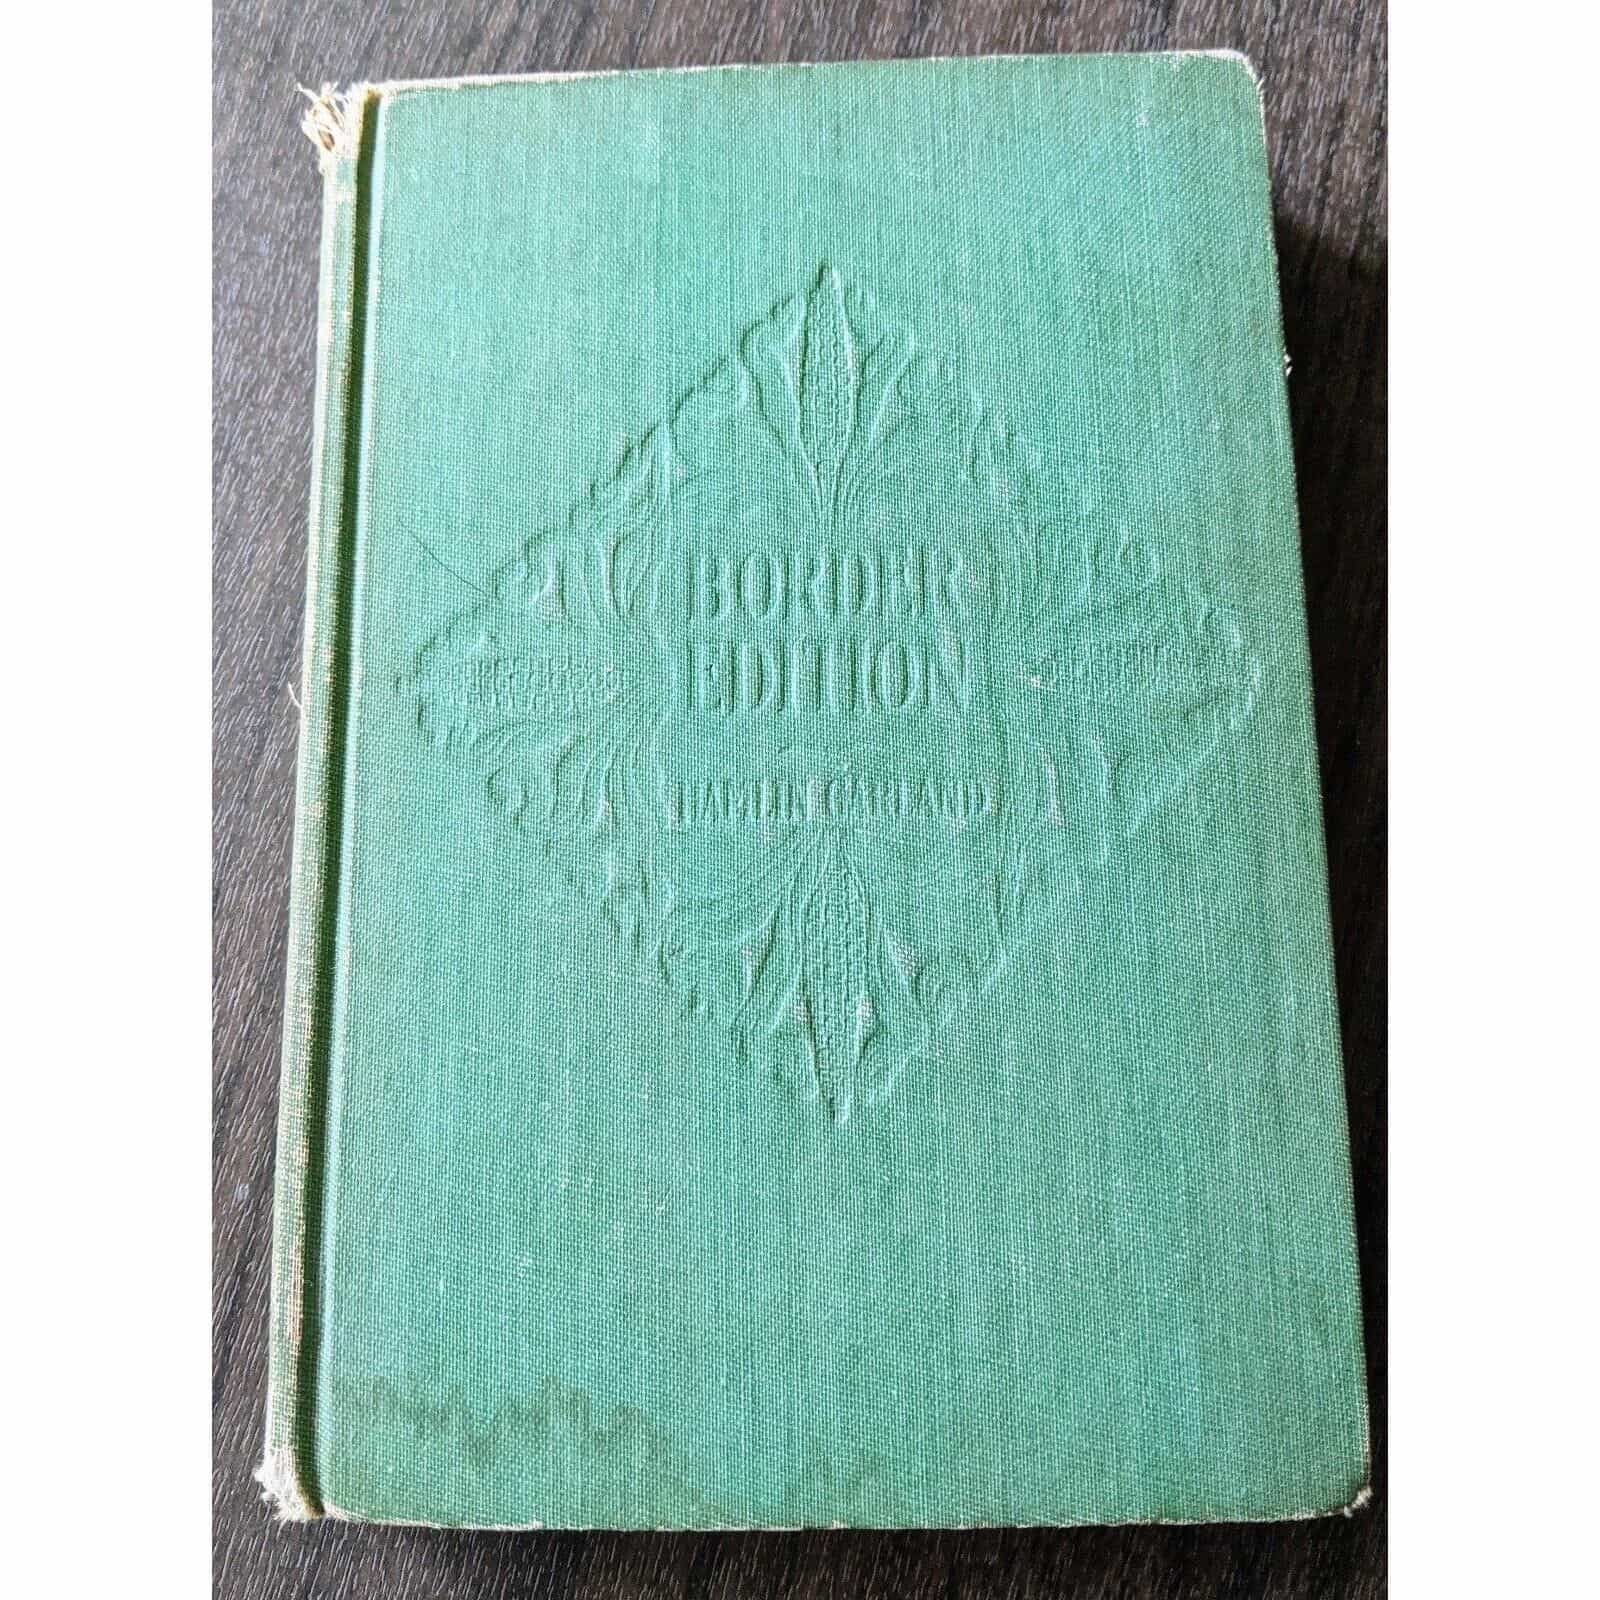 Maine-Travelled Roads by Hamlin Garland 1899 Book